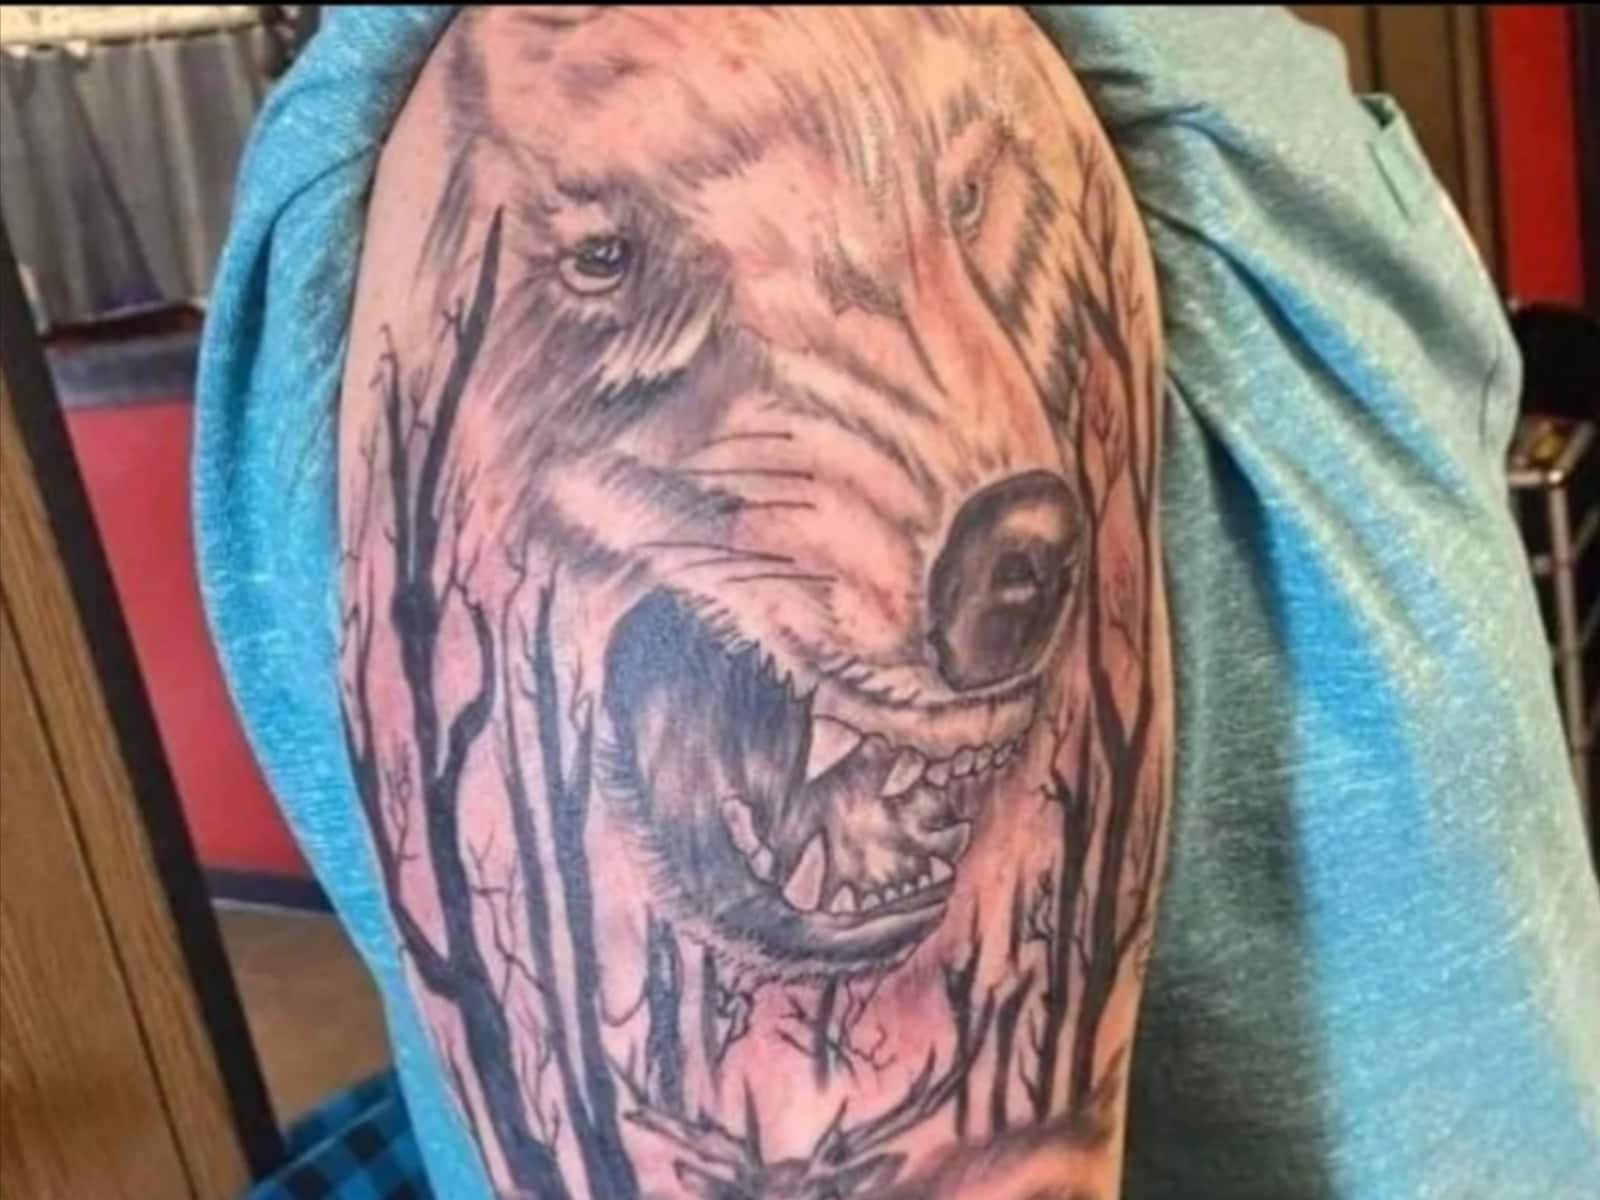 Tattoo artist deserves jail as new inking of deformed wolf is mocked  online  Mirror Online